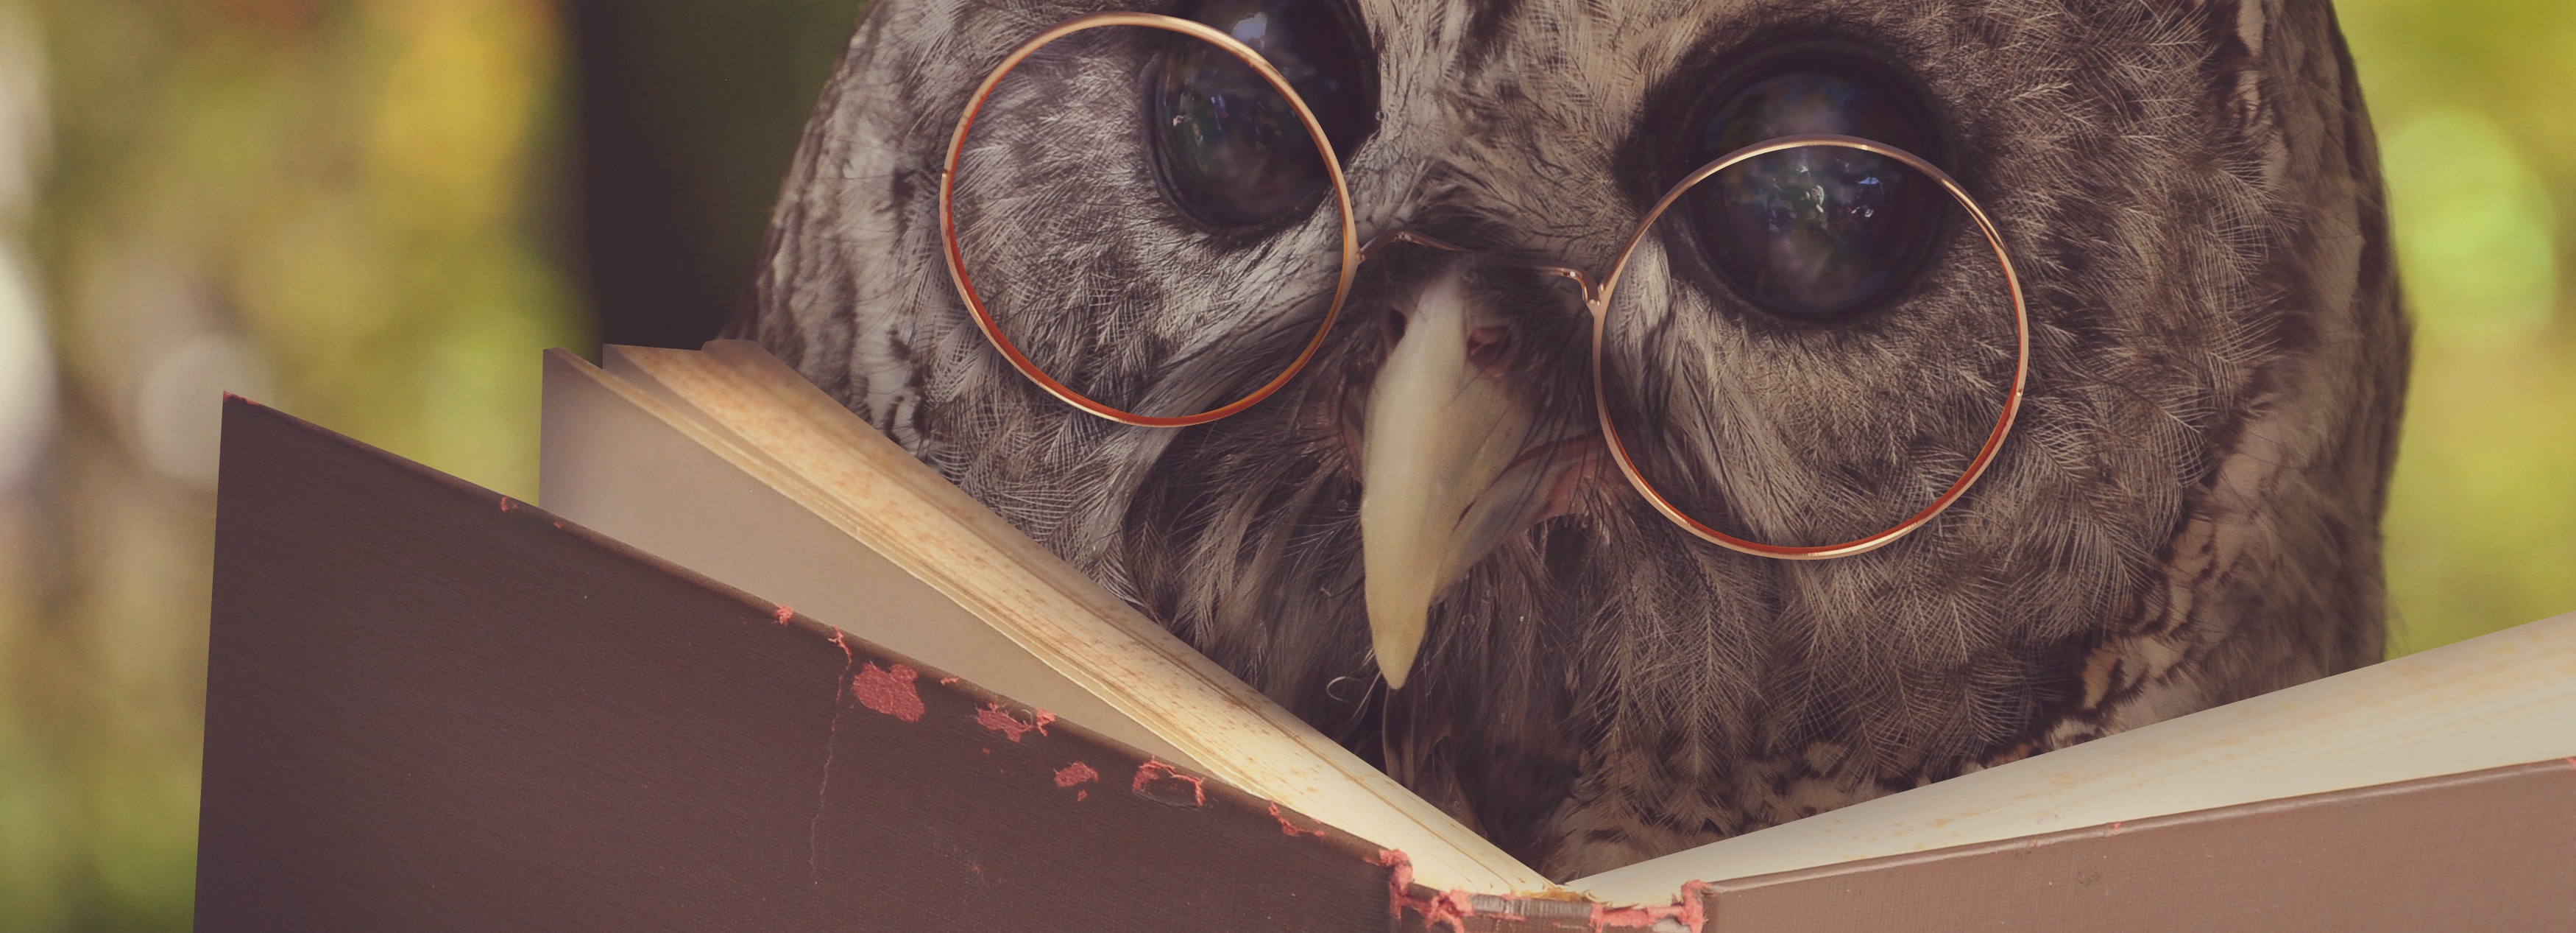 A studious owl